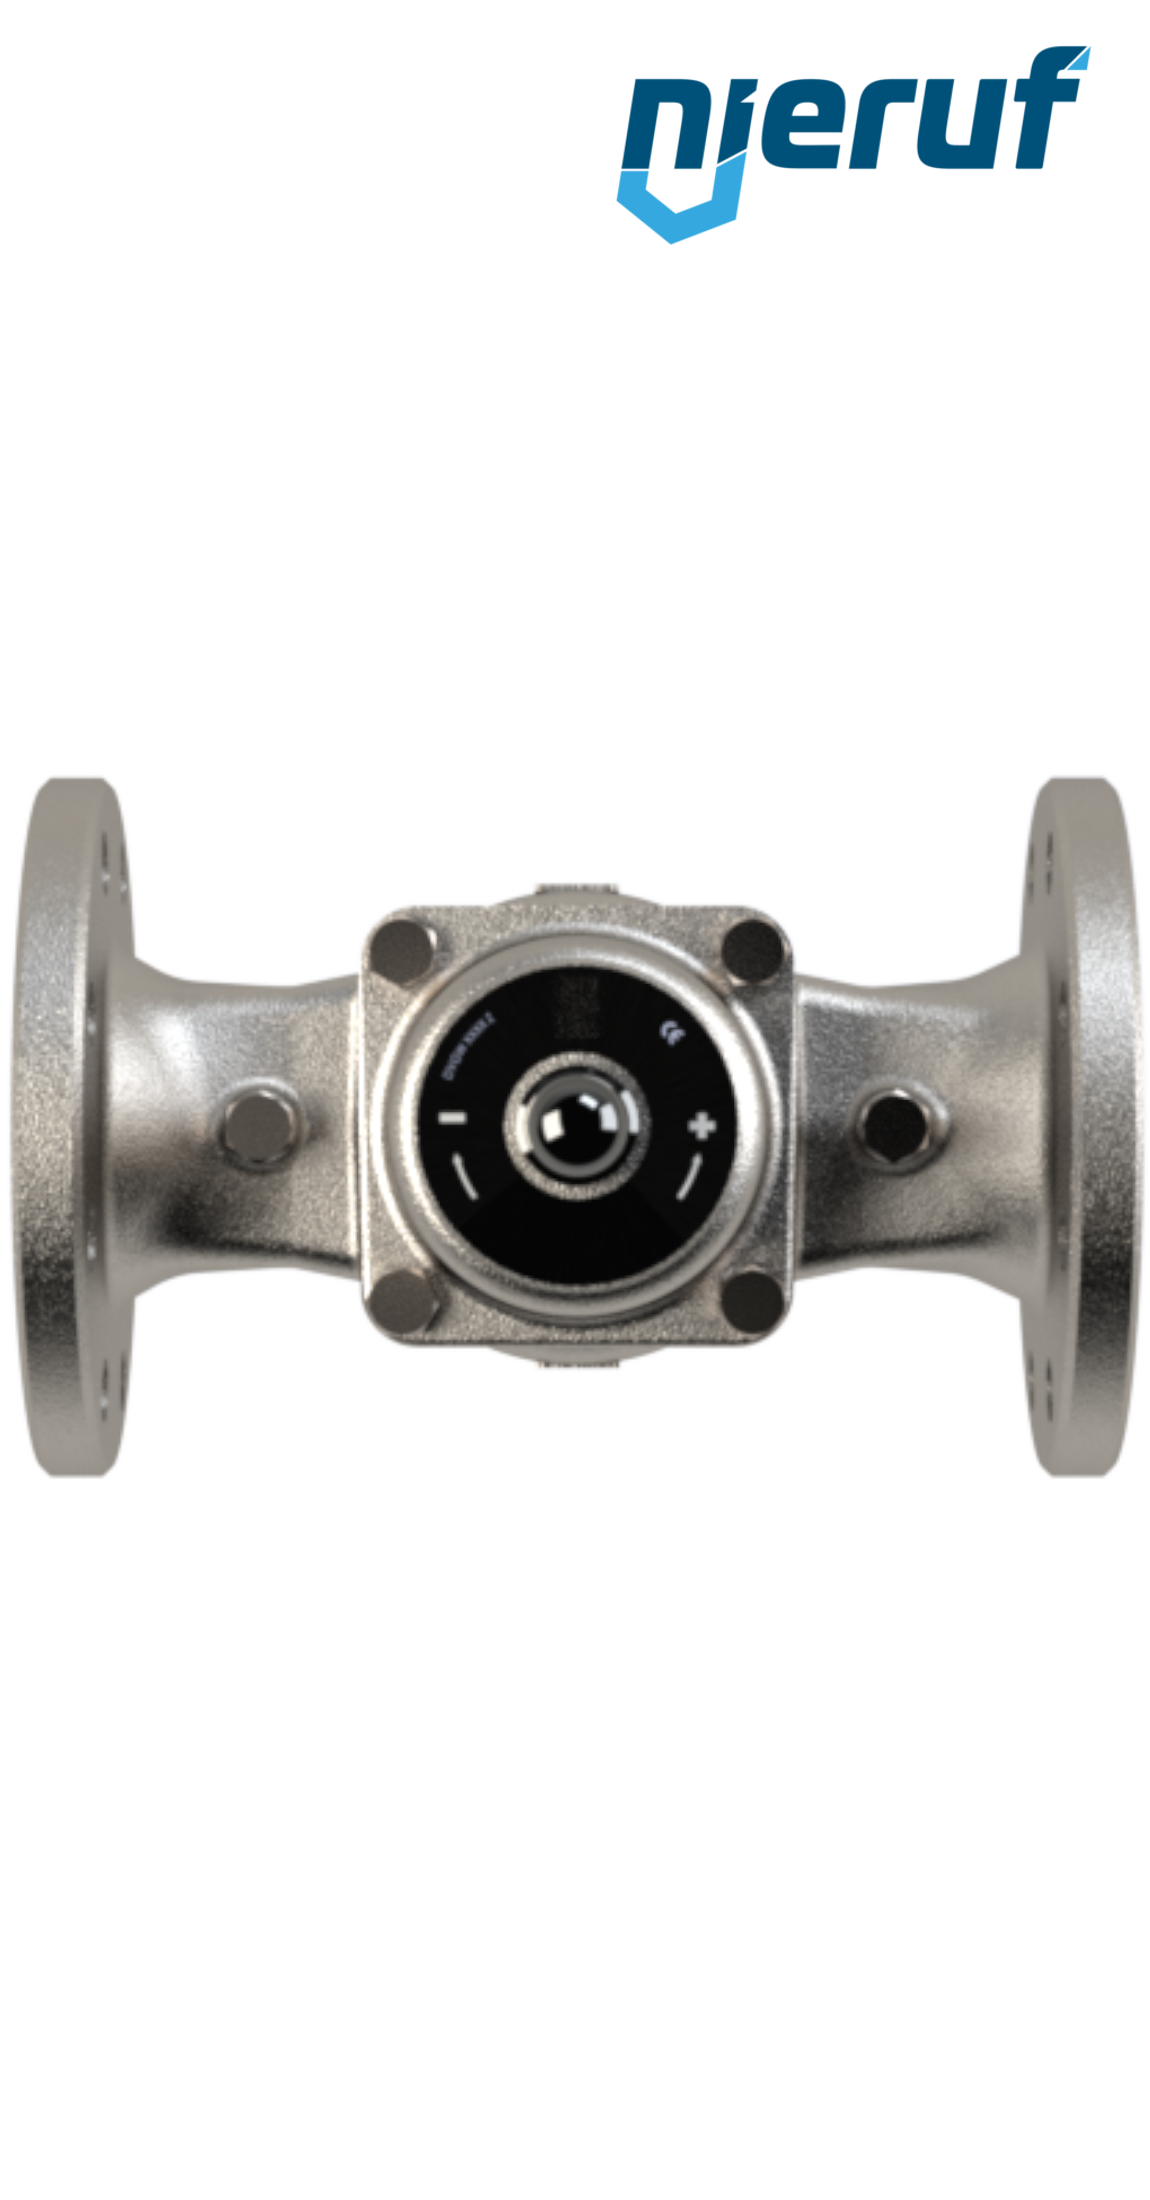 Flange-pressure reducing valve DN 80 PN40 DM08 stainless steel FKM 1.0 - 8.0 bar